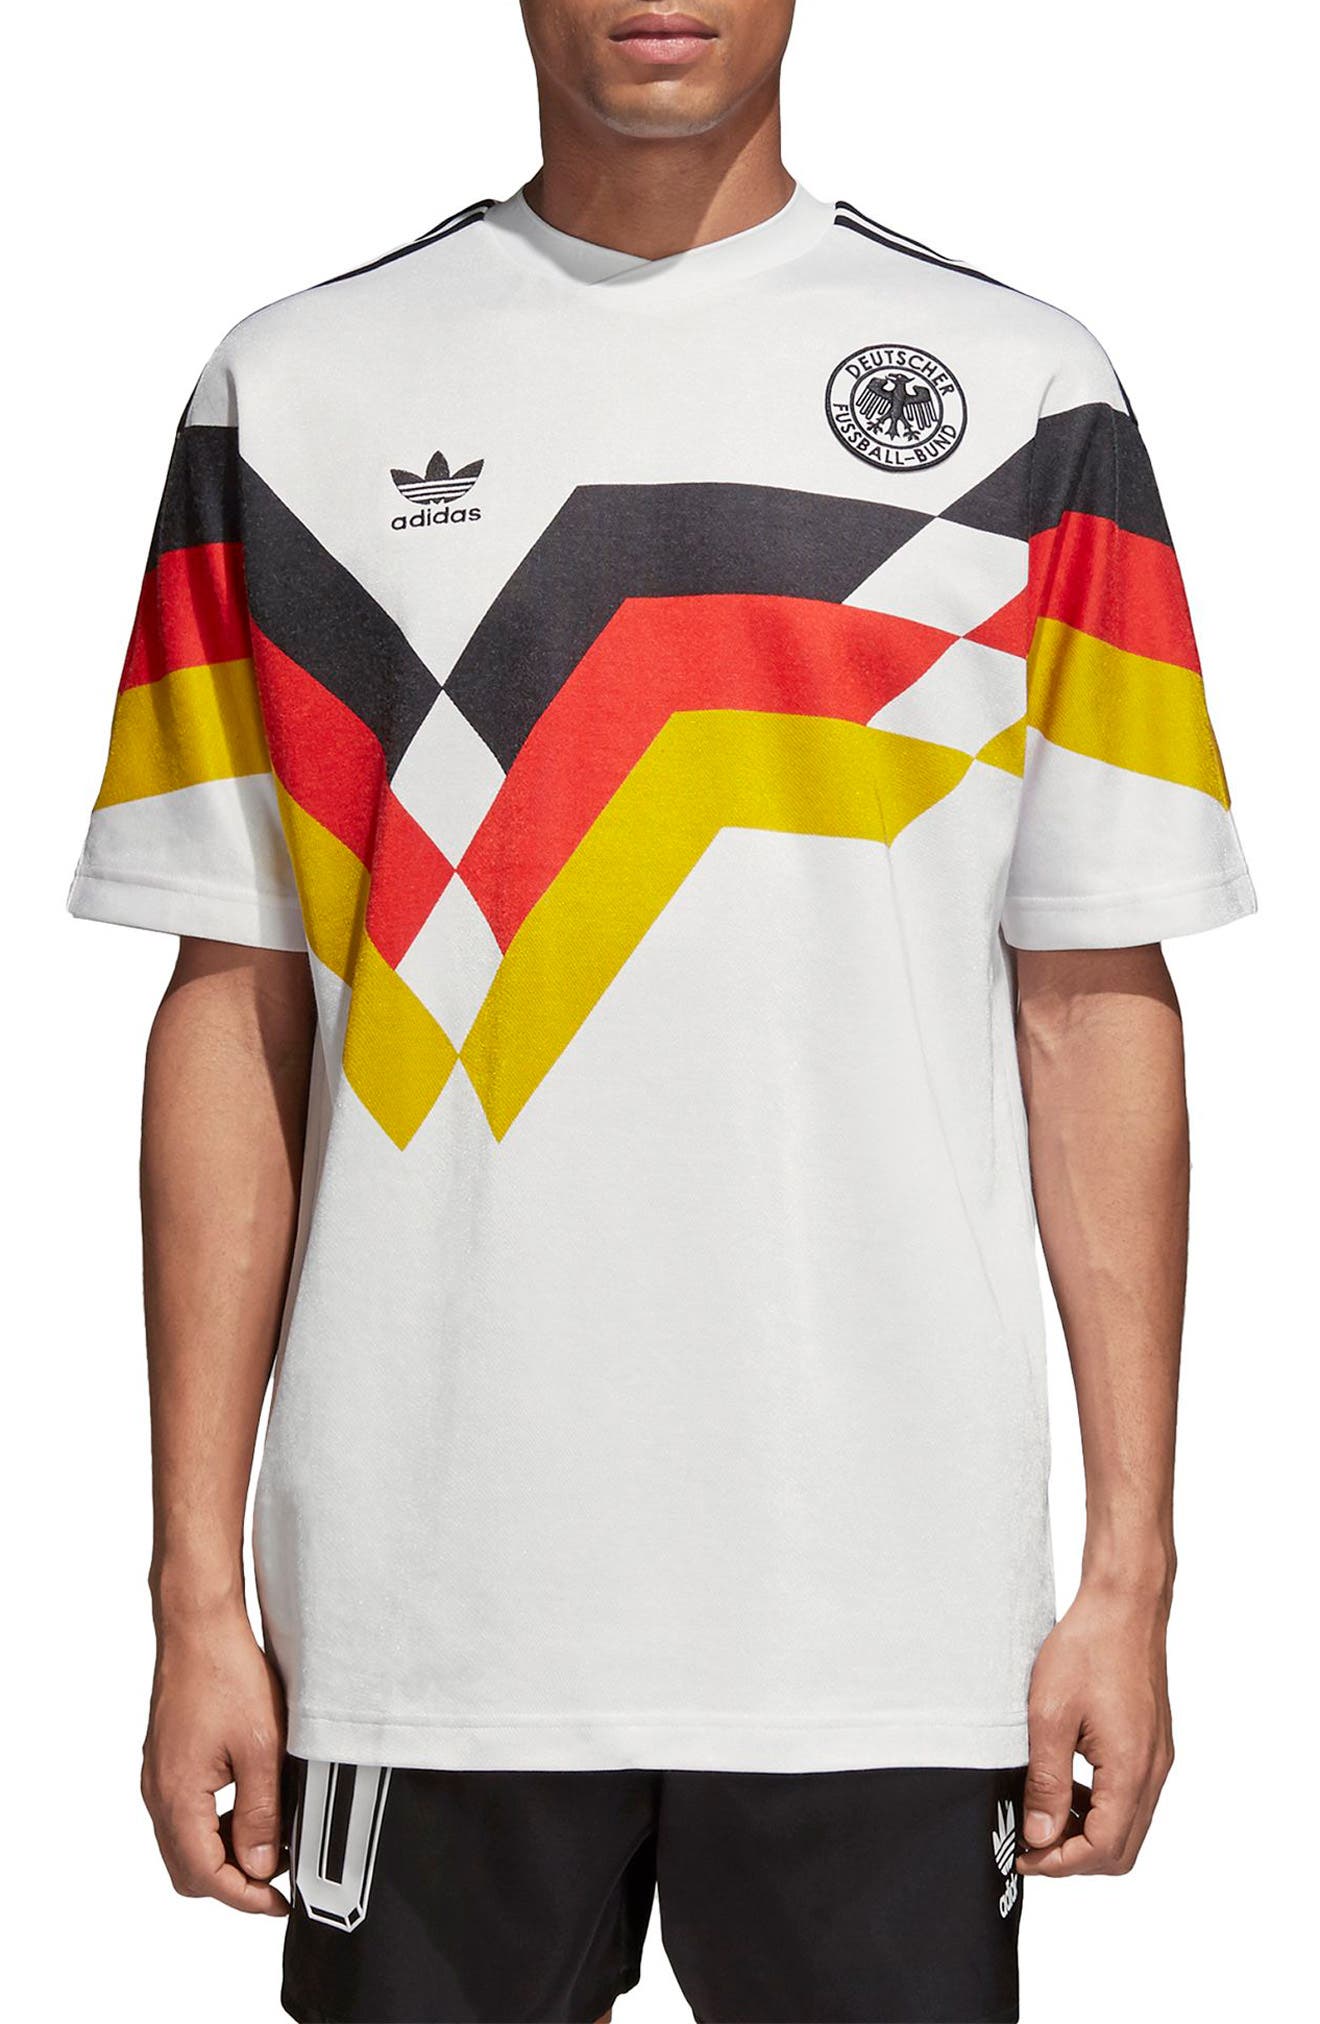 adidas Original Germany 1990 Soccer 